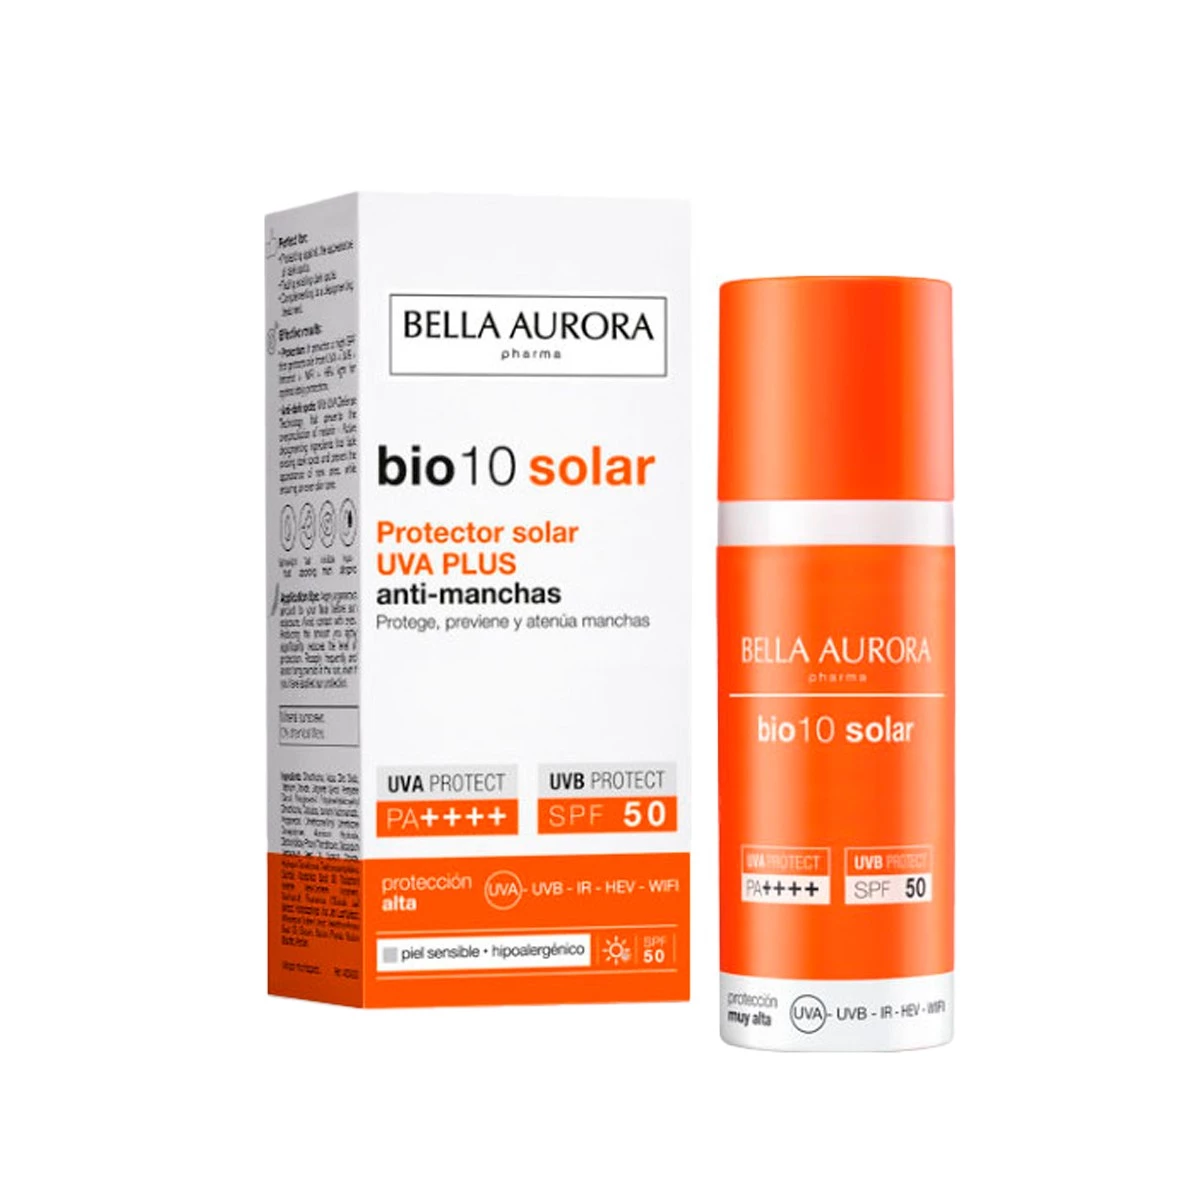 Bella Aurora BIO10 Solar Piel Sensible, 50ml.